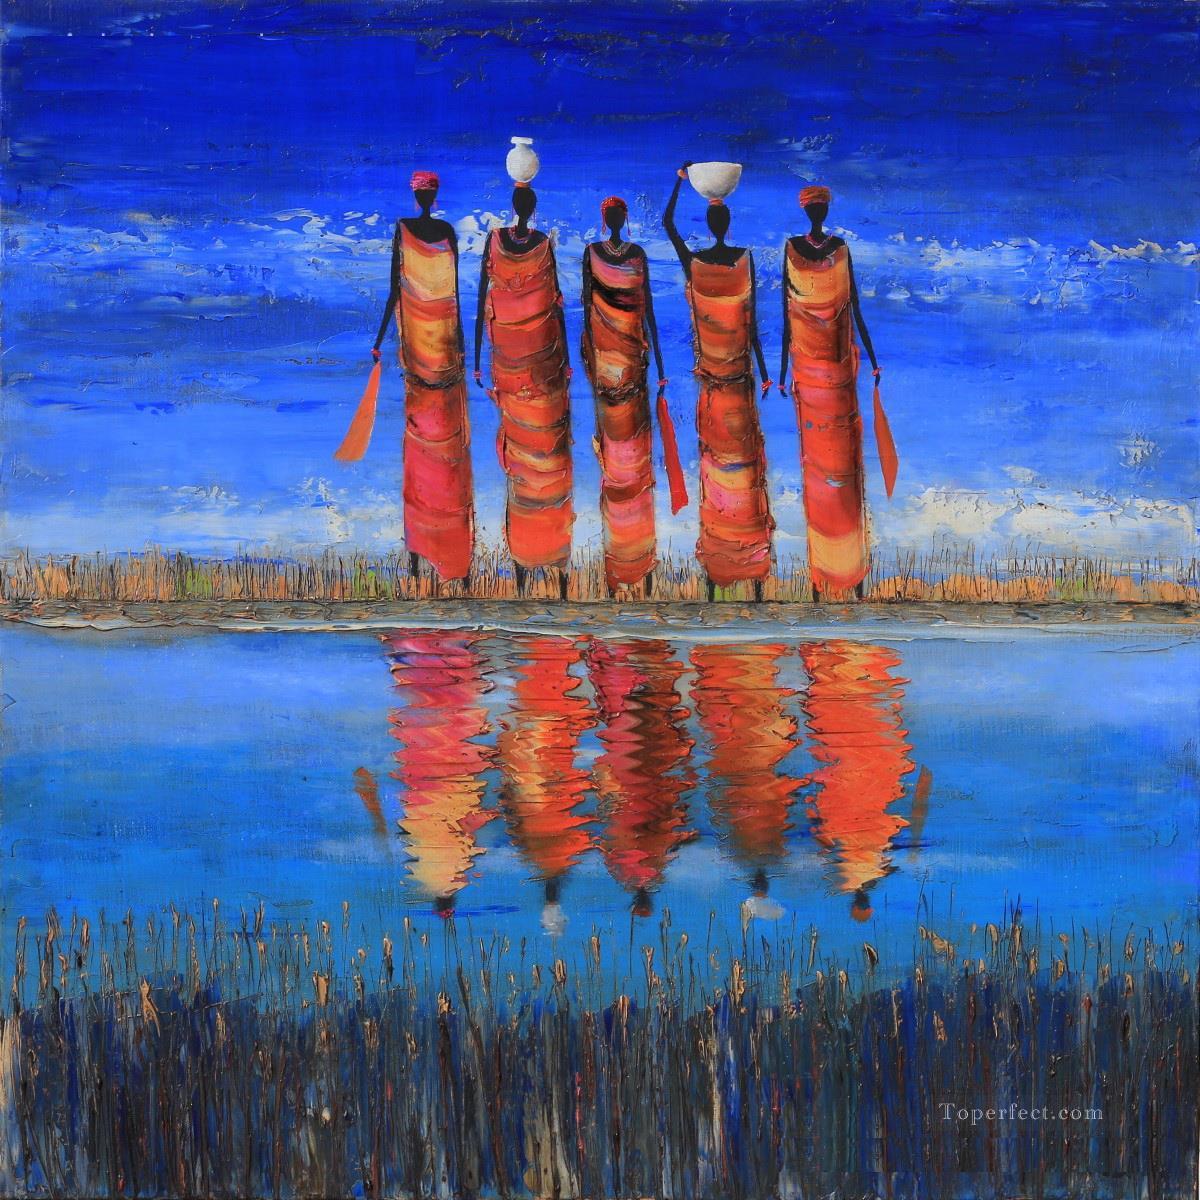 black women on the river bank Landscape Oil Paintings